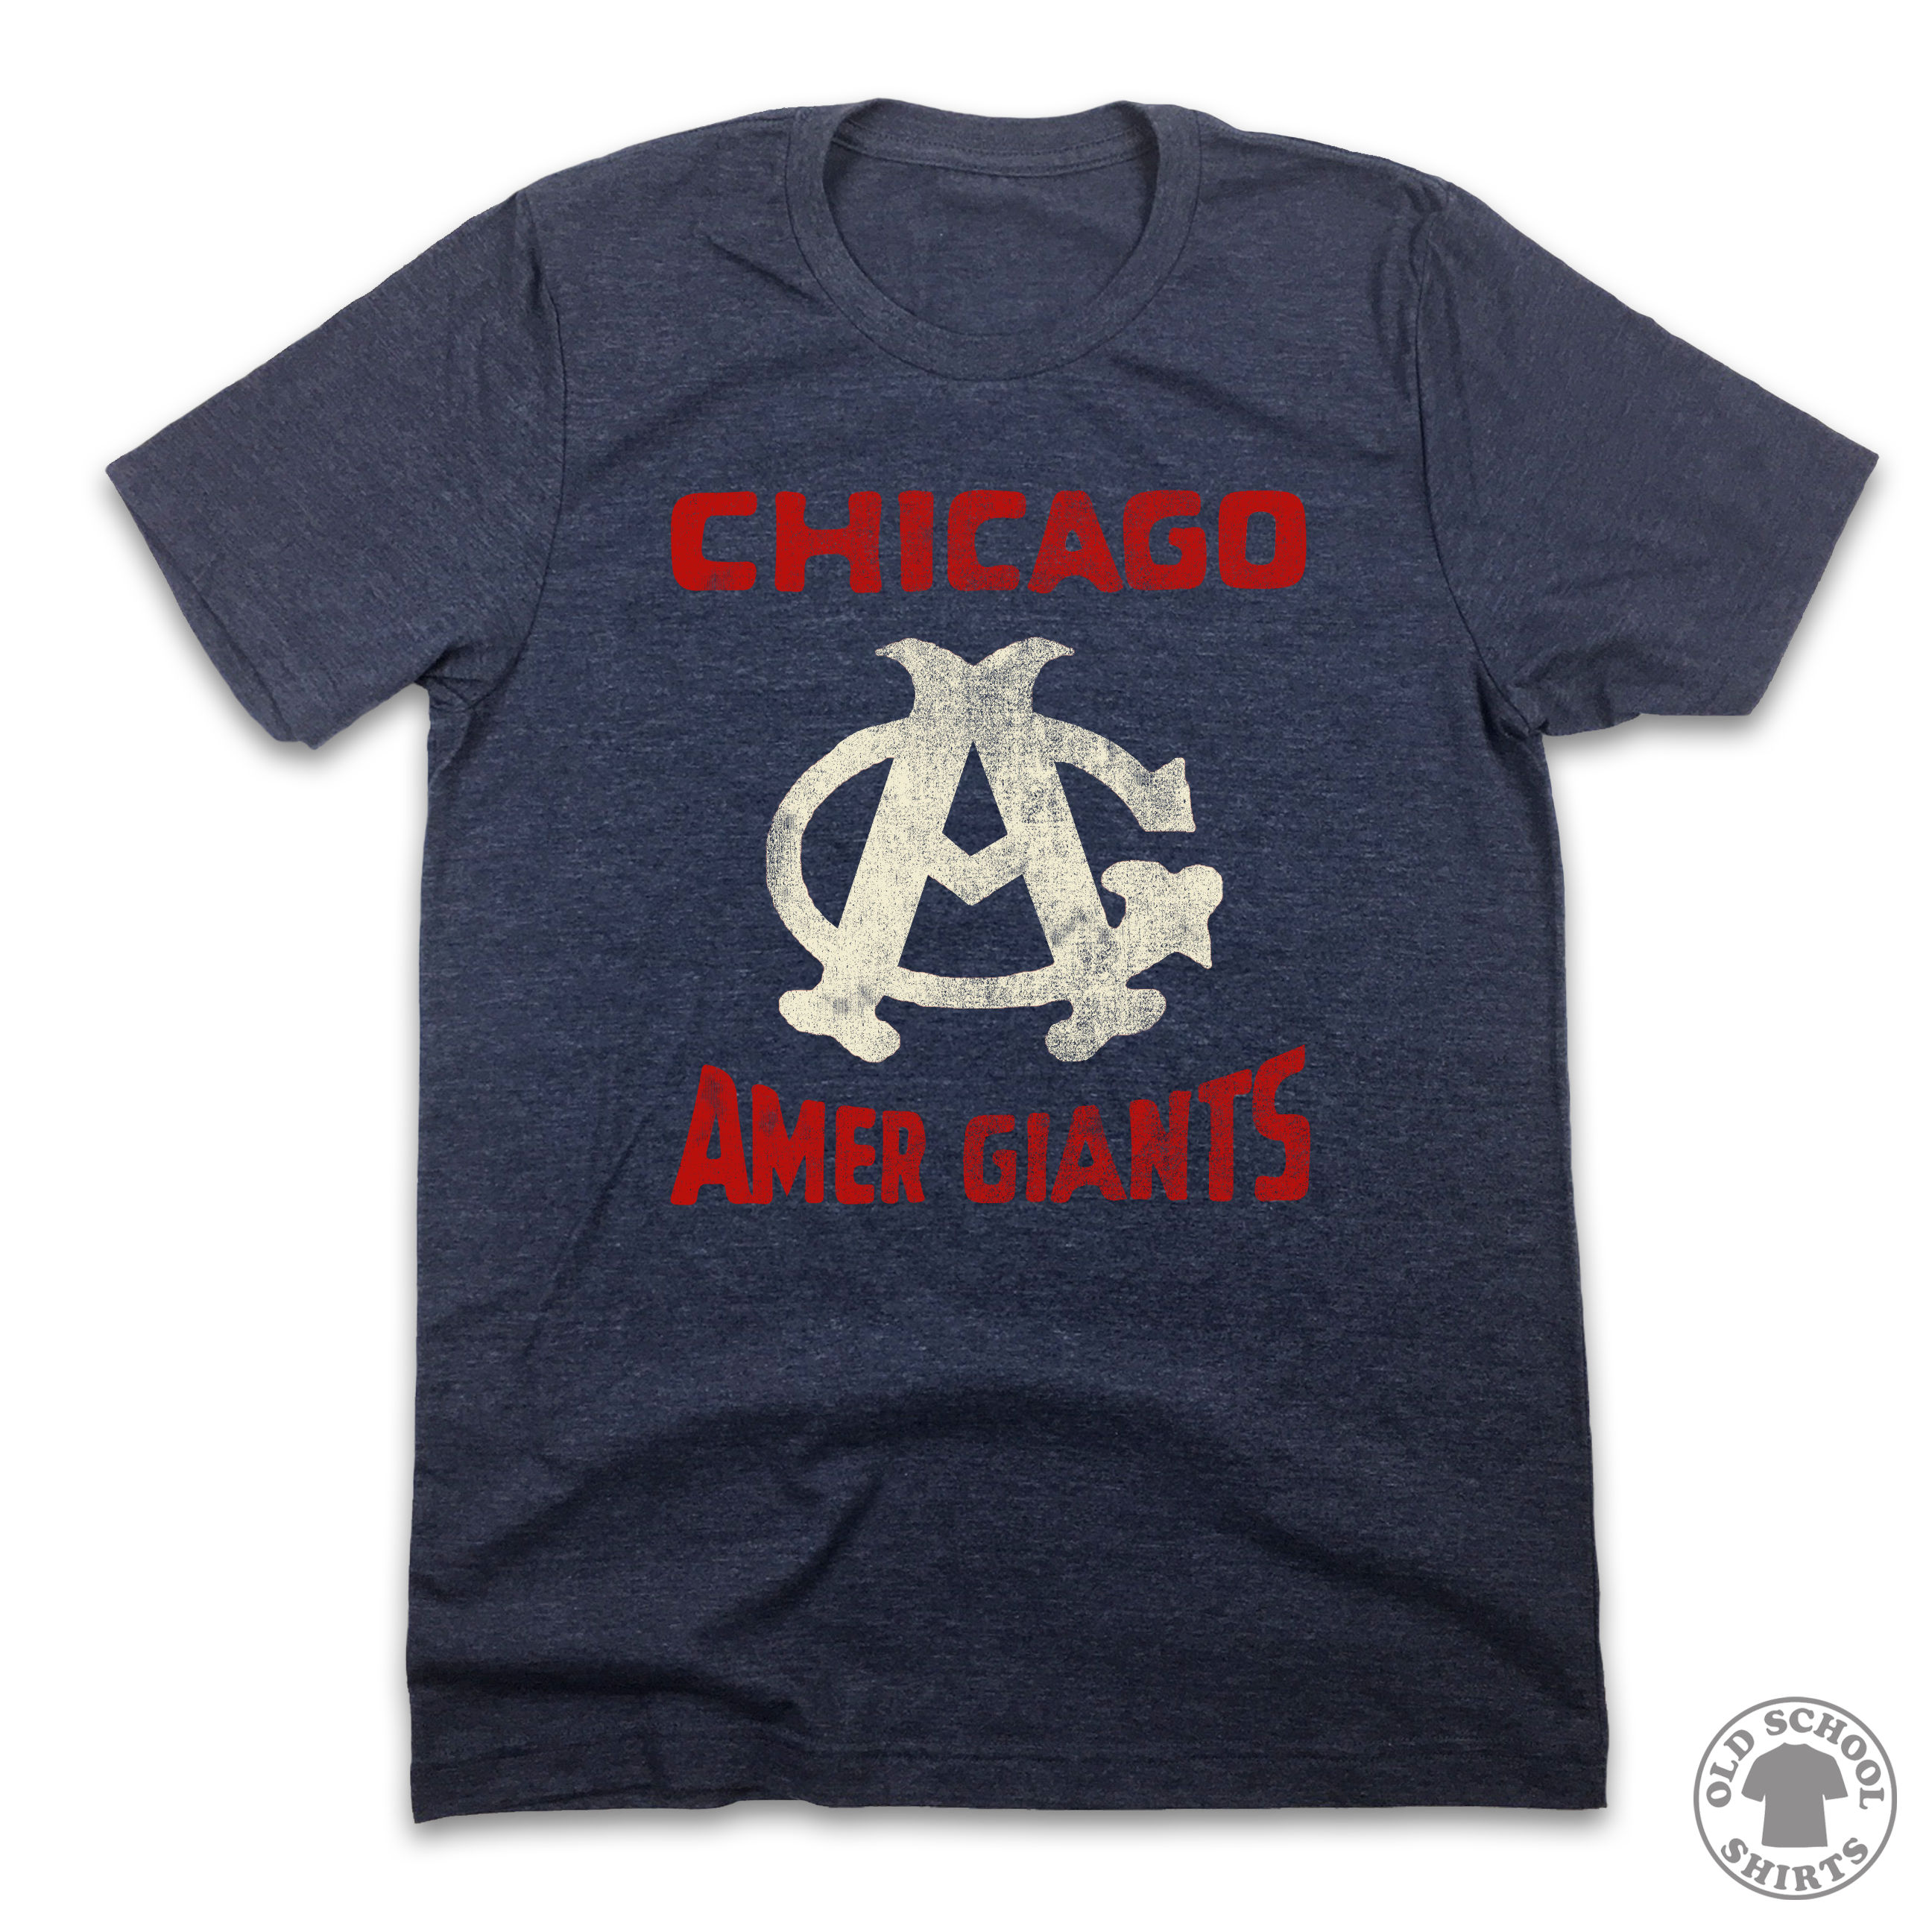 Chicago Amer Giants - Old School Shirts- Retro Sports T Shirts